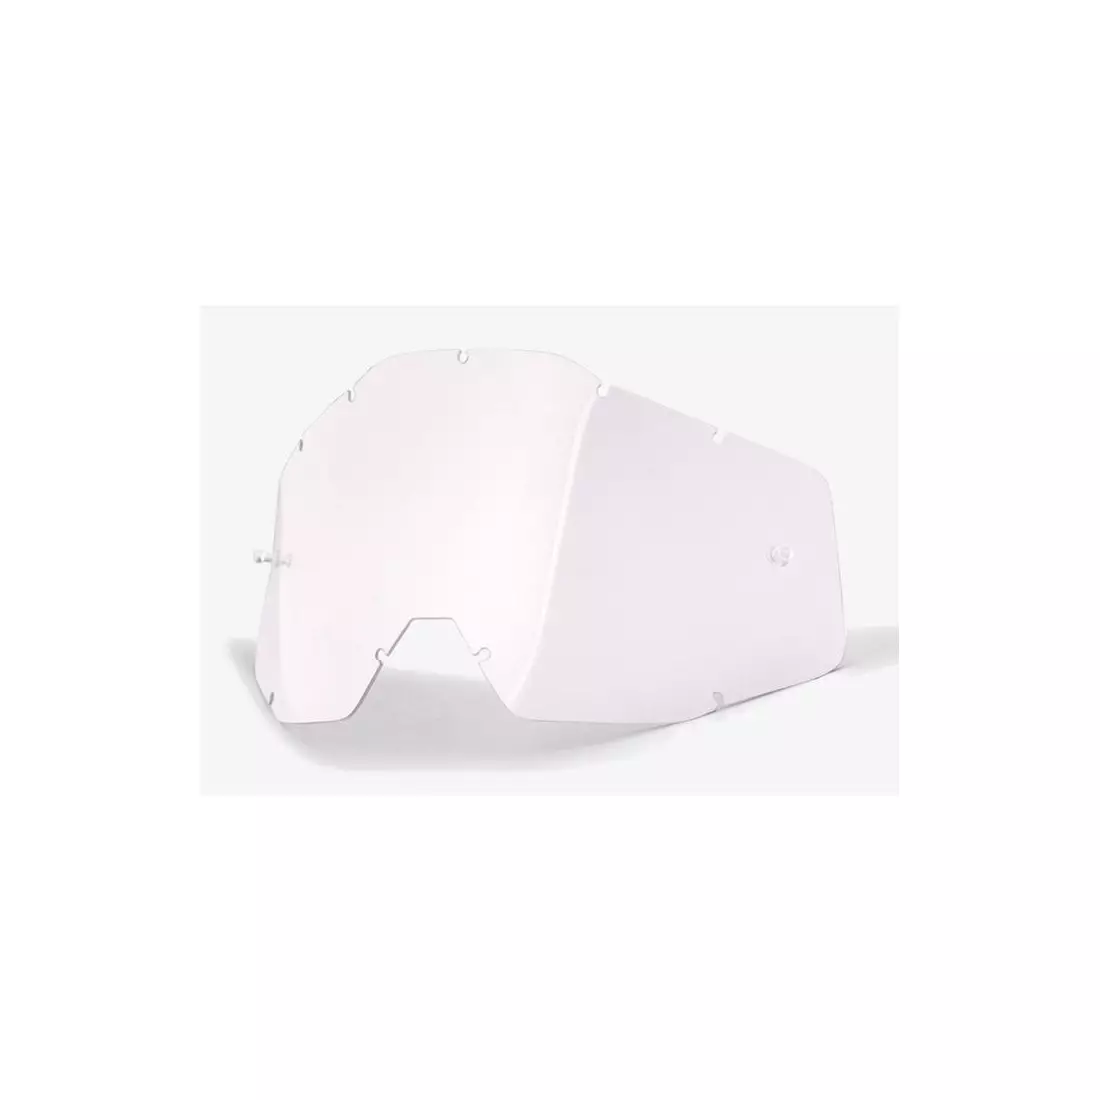 100% goggle glass racecraft/accuri/strata (clear lens Anti-Fog) STO-51001-010-02